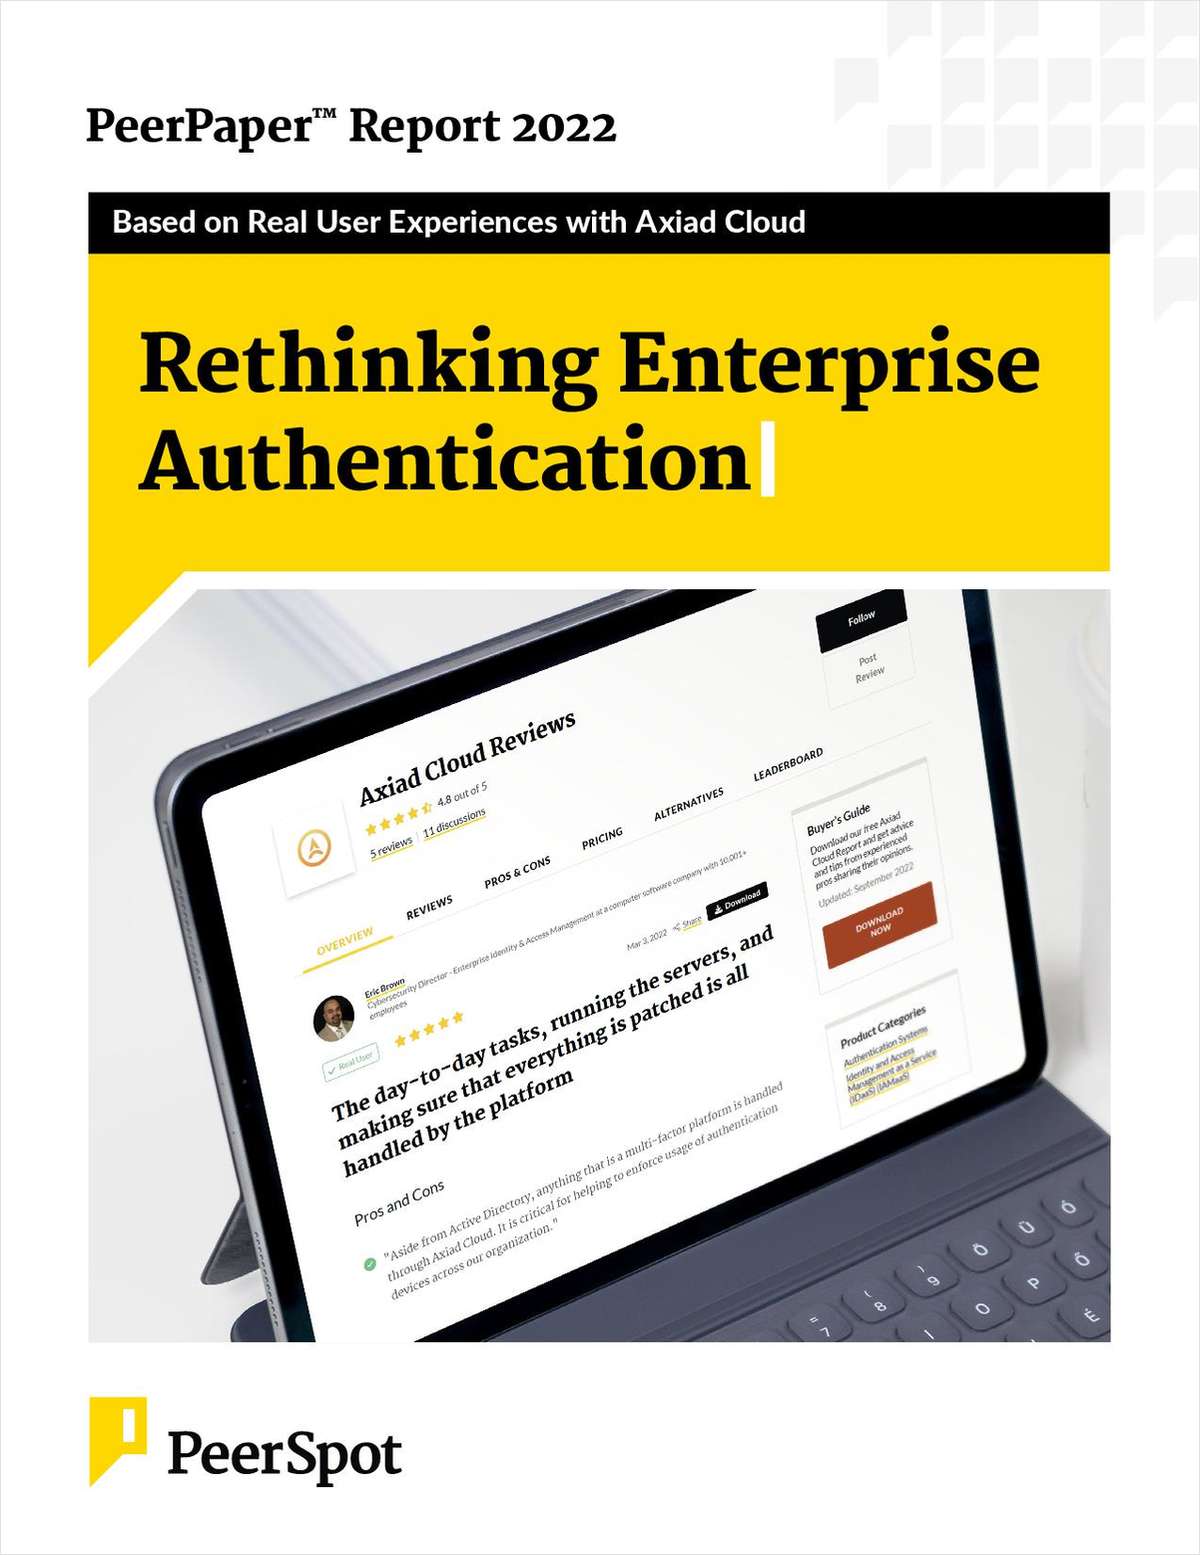 Rethinking Enterprise Authenticaton, A Better Way to Handle